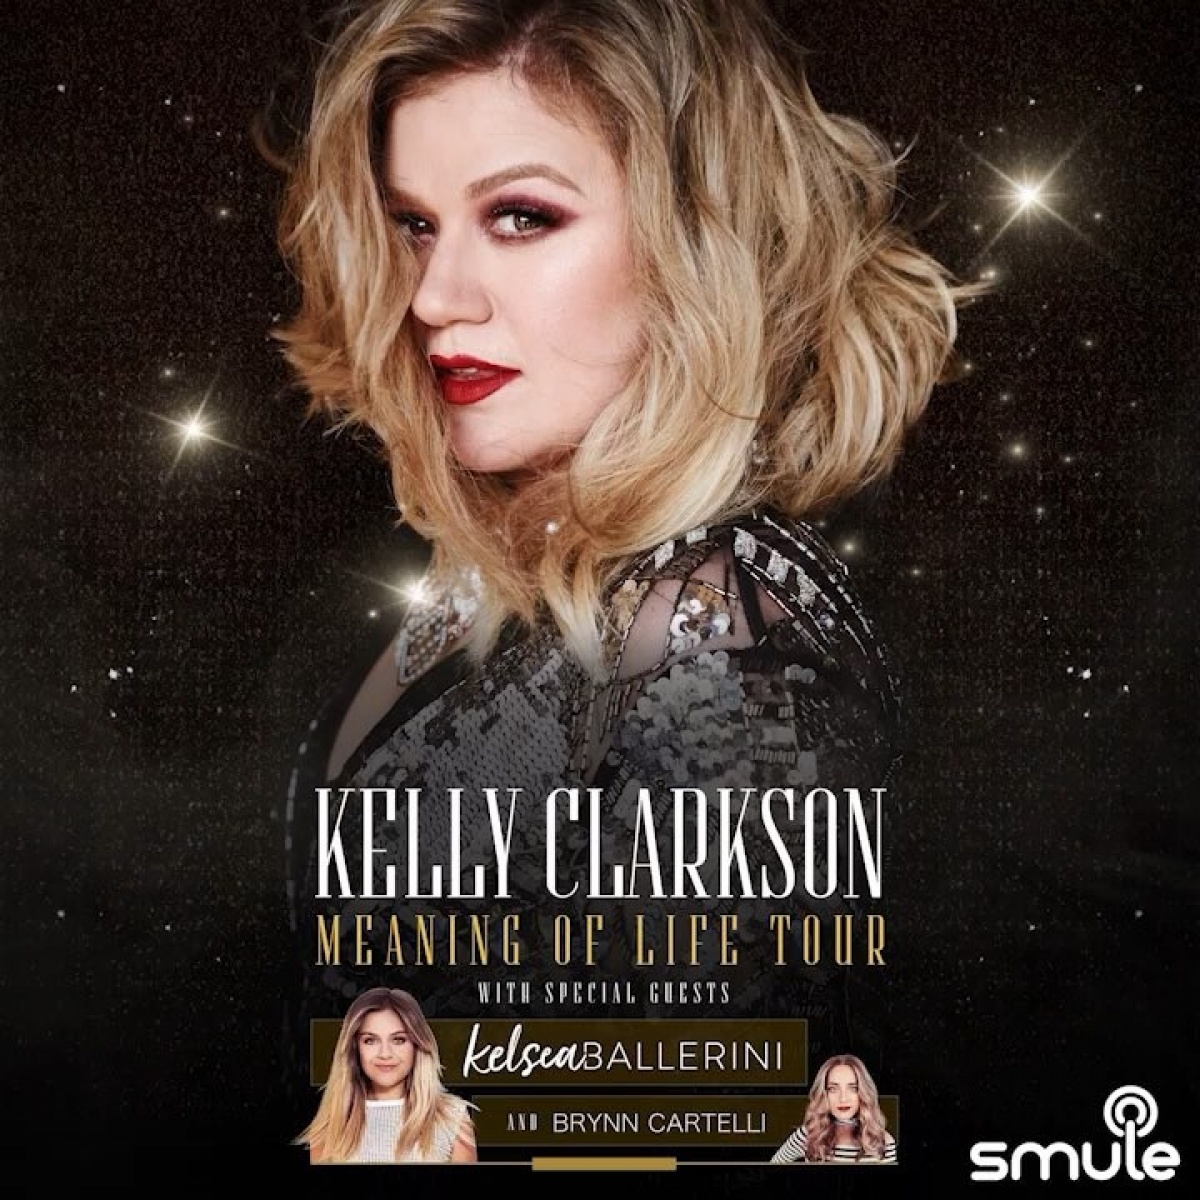 Kelly Clarkson announces 2019 tour with Kelsea Ballerini and 'The Voice' winner Brynn ...1200 x 1200